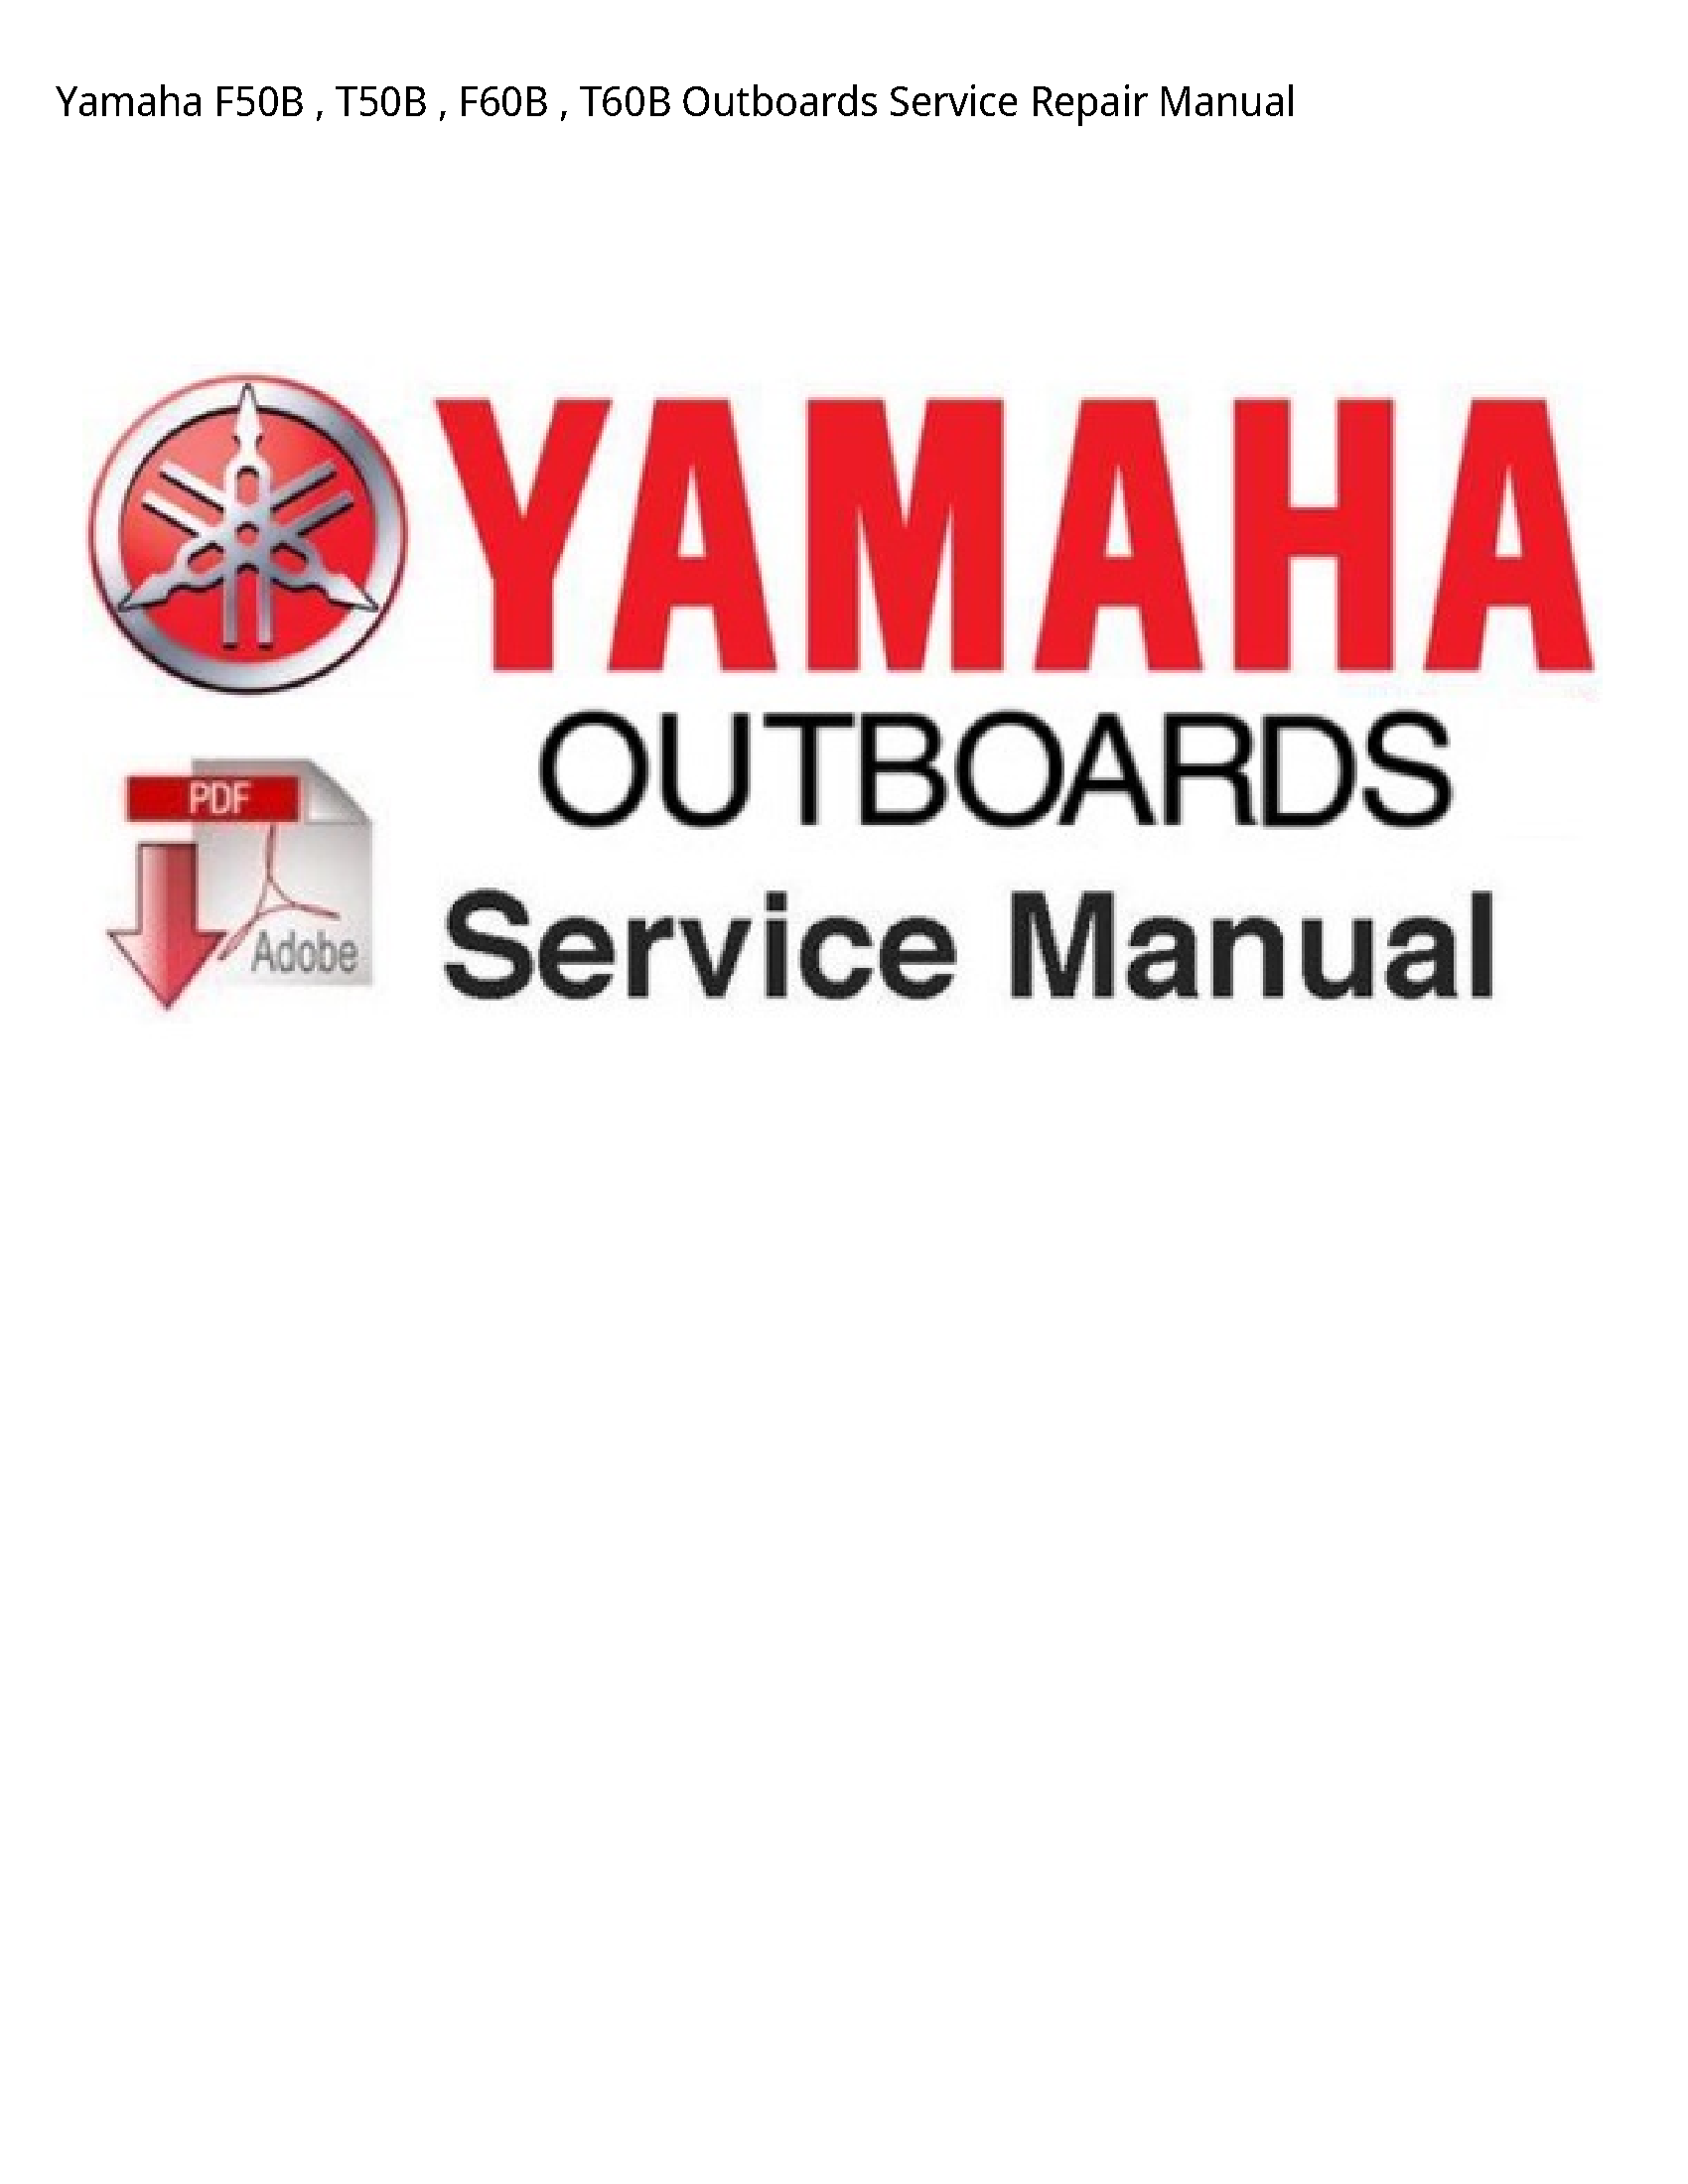 Yamaha F50B Outboards manual